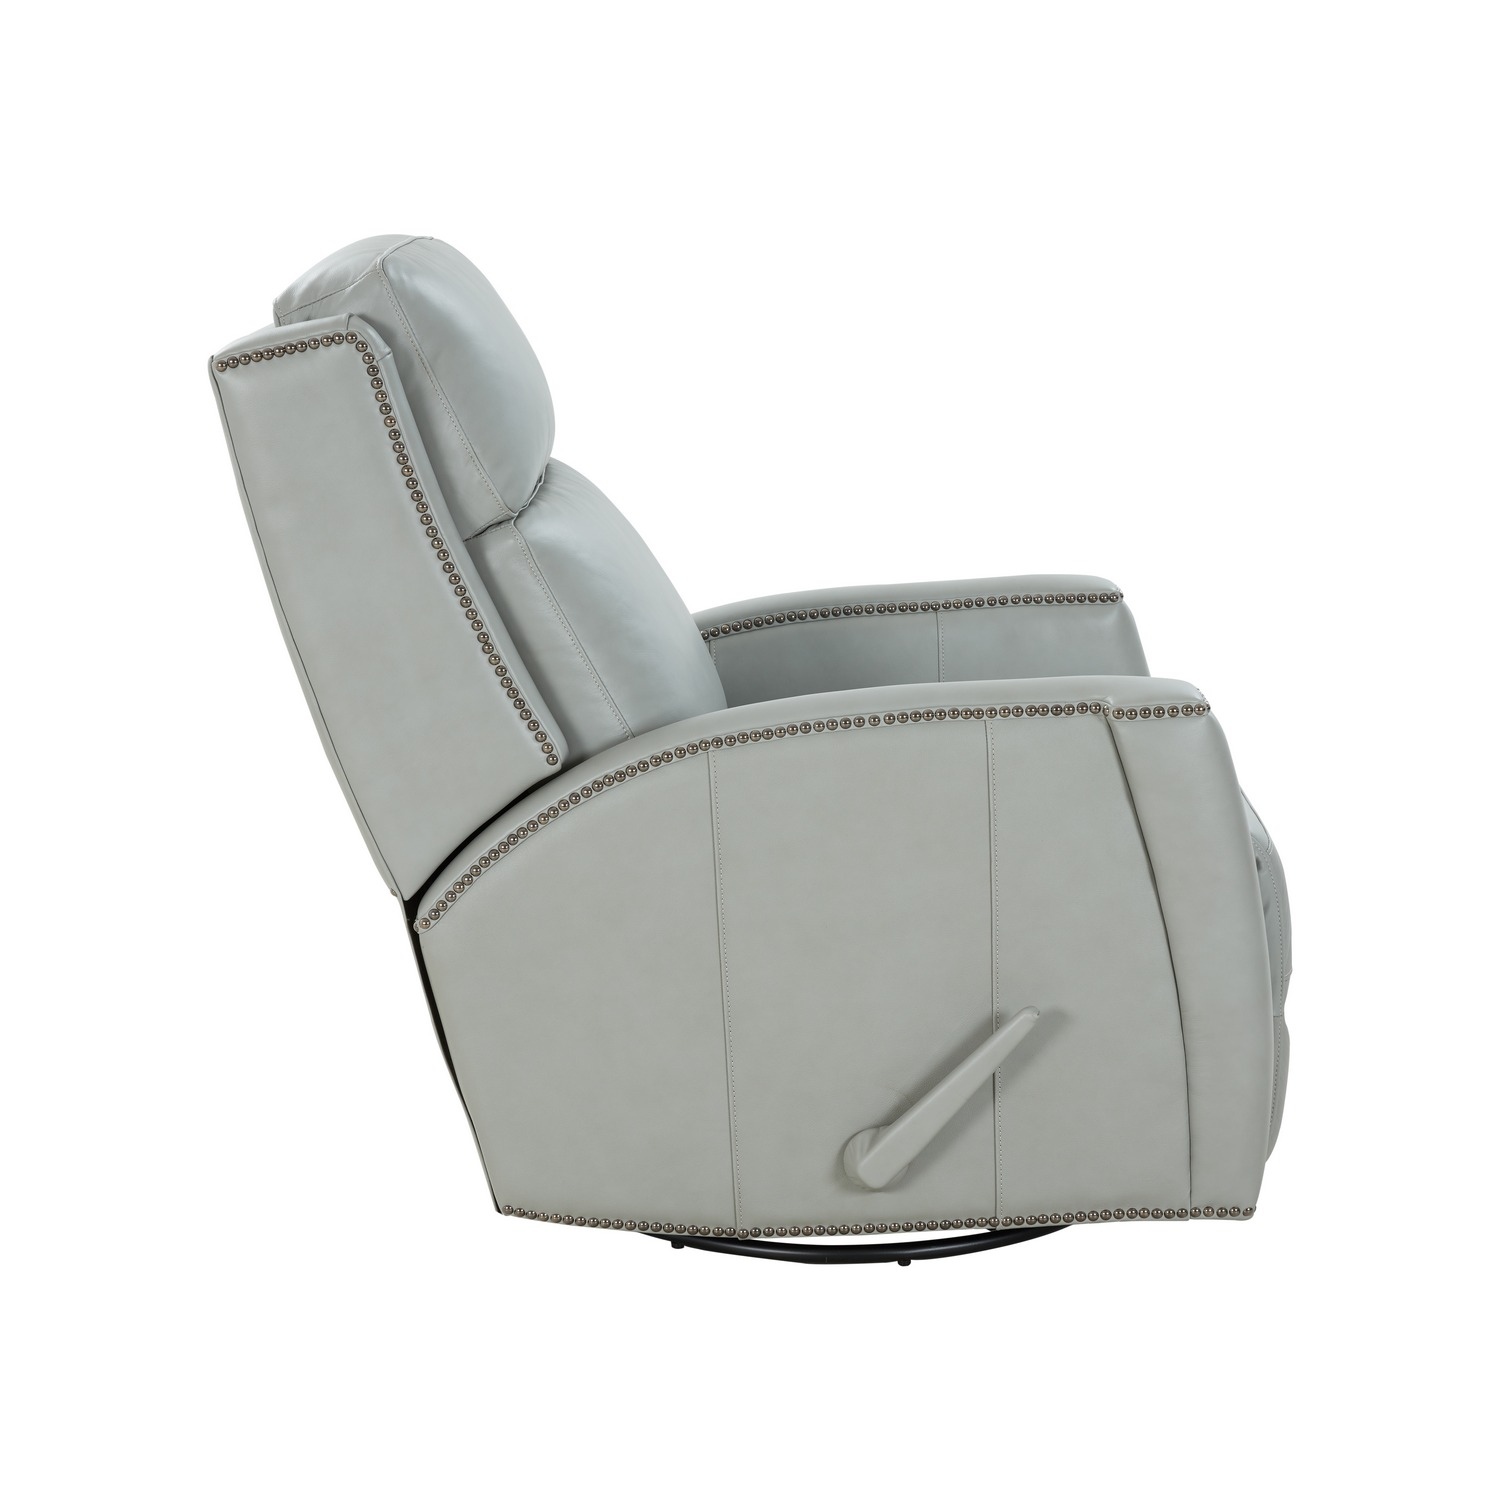 Barcalounger Brandt Swivel Glider Recliner Chair - Corbett Chromium/All Leather